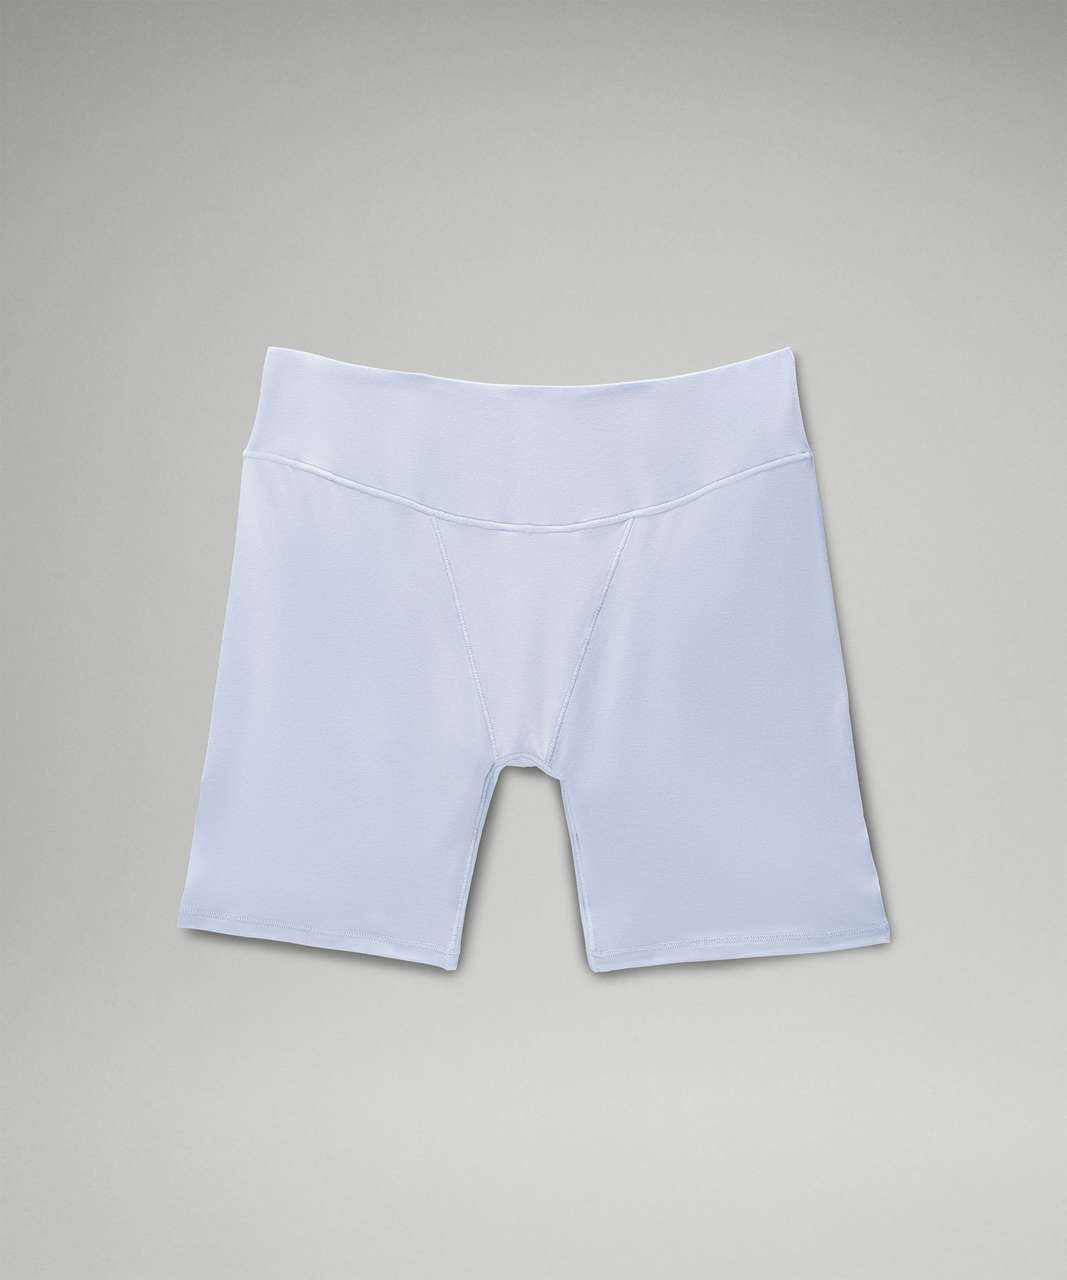 Lululemon UnderEase Super-High-Rise Shortie Underwear 5 - Pale Linen -  lulu fanatics